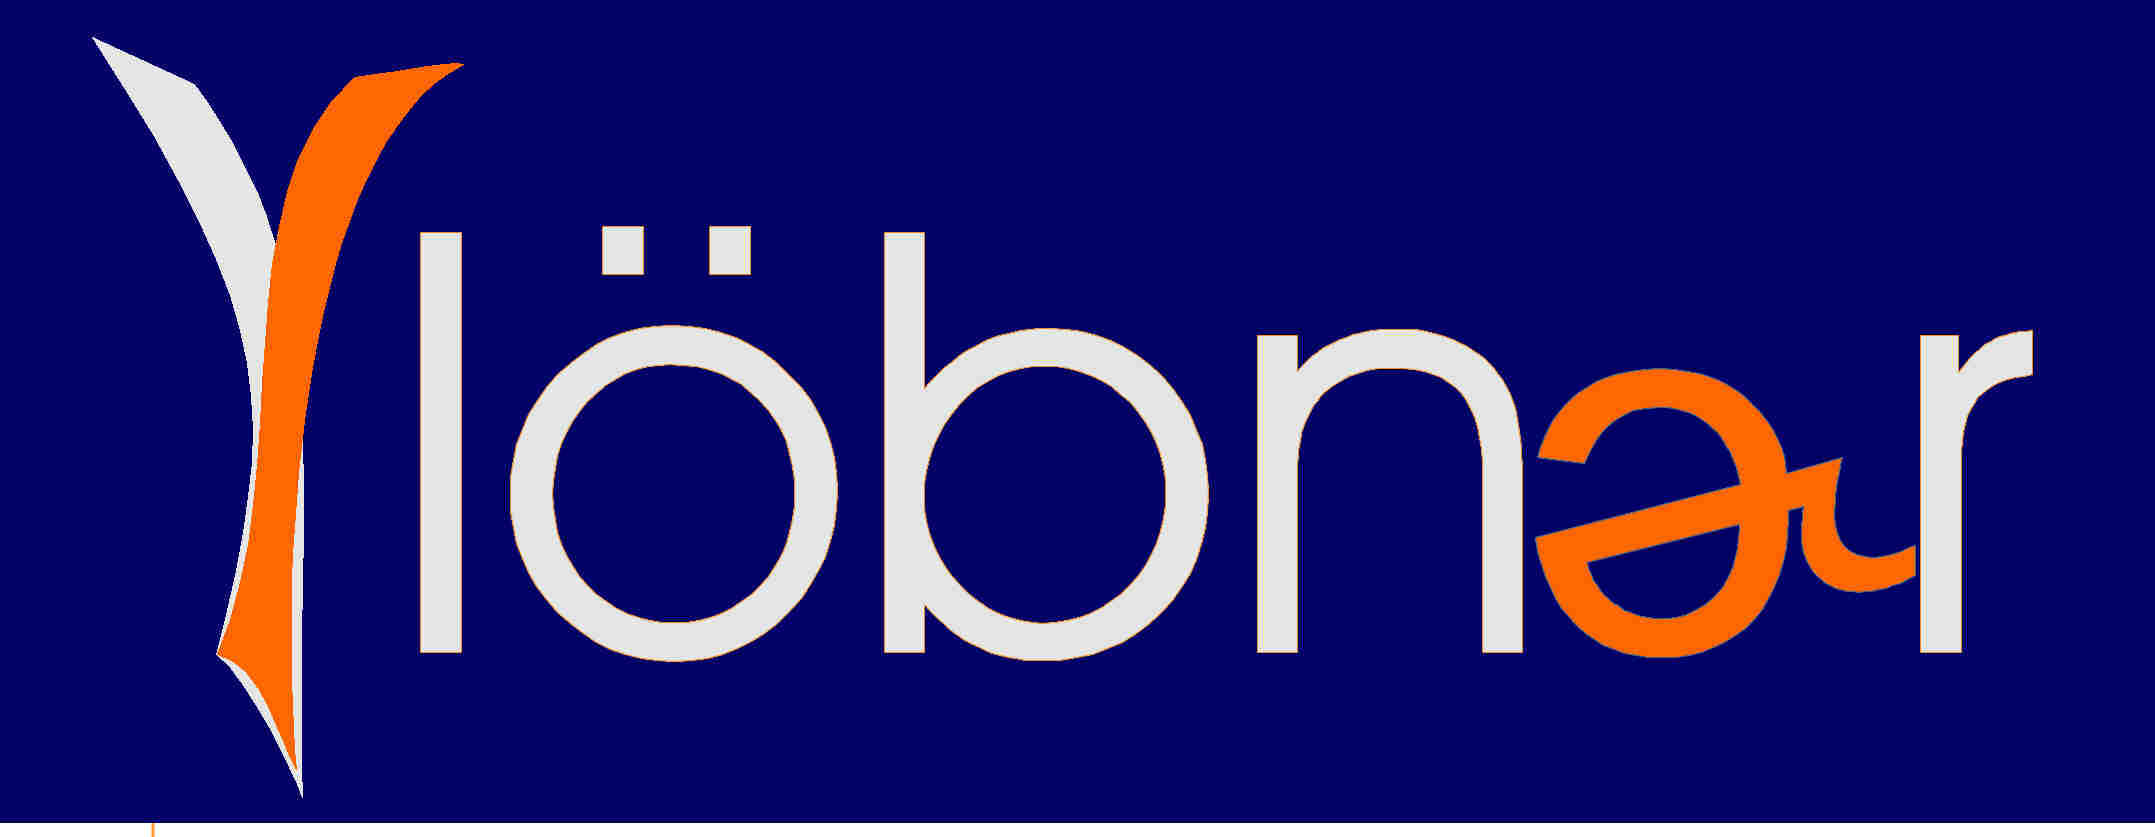 Logo Loebner web.JPG (76630 bytes)